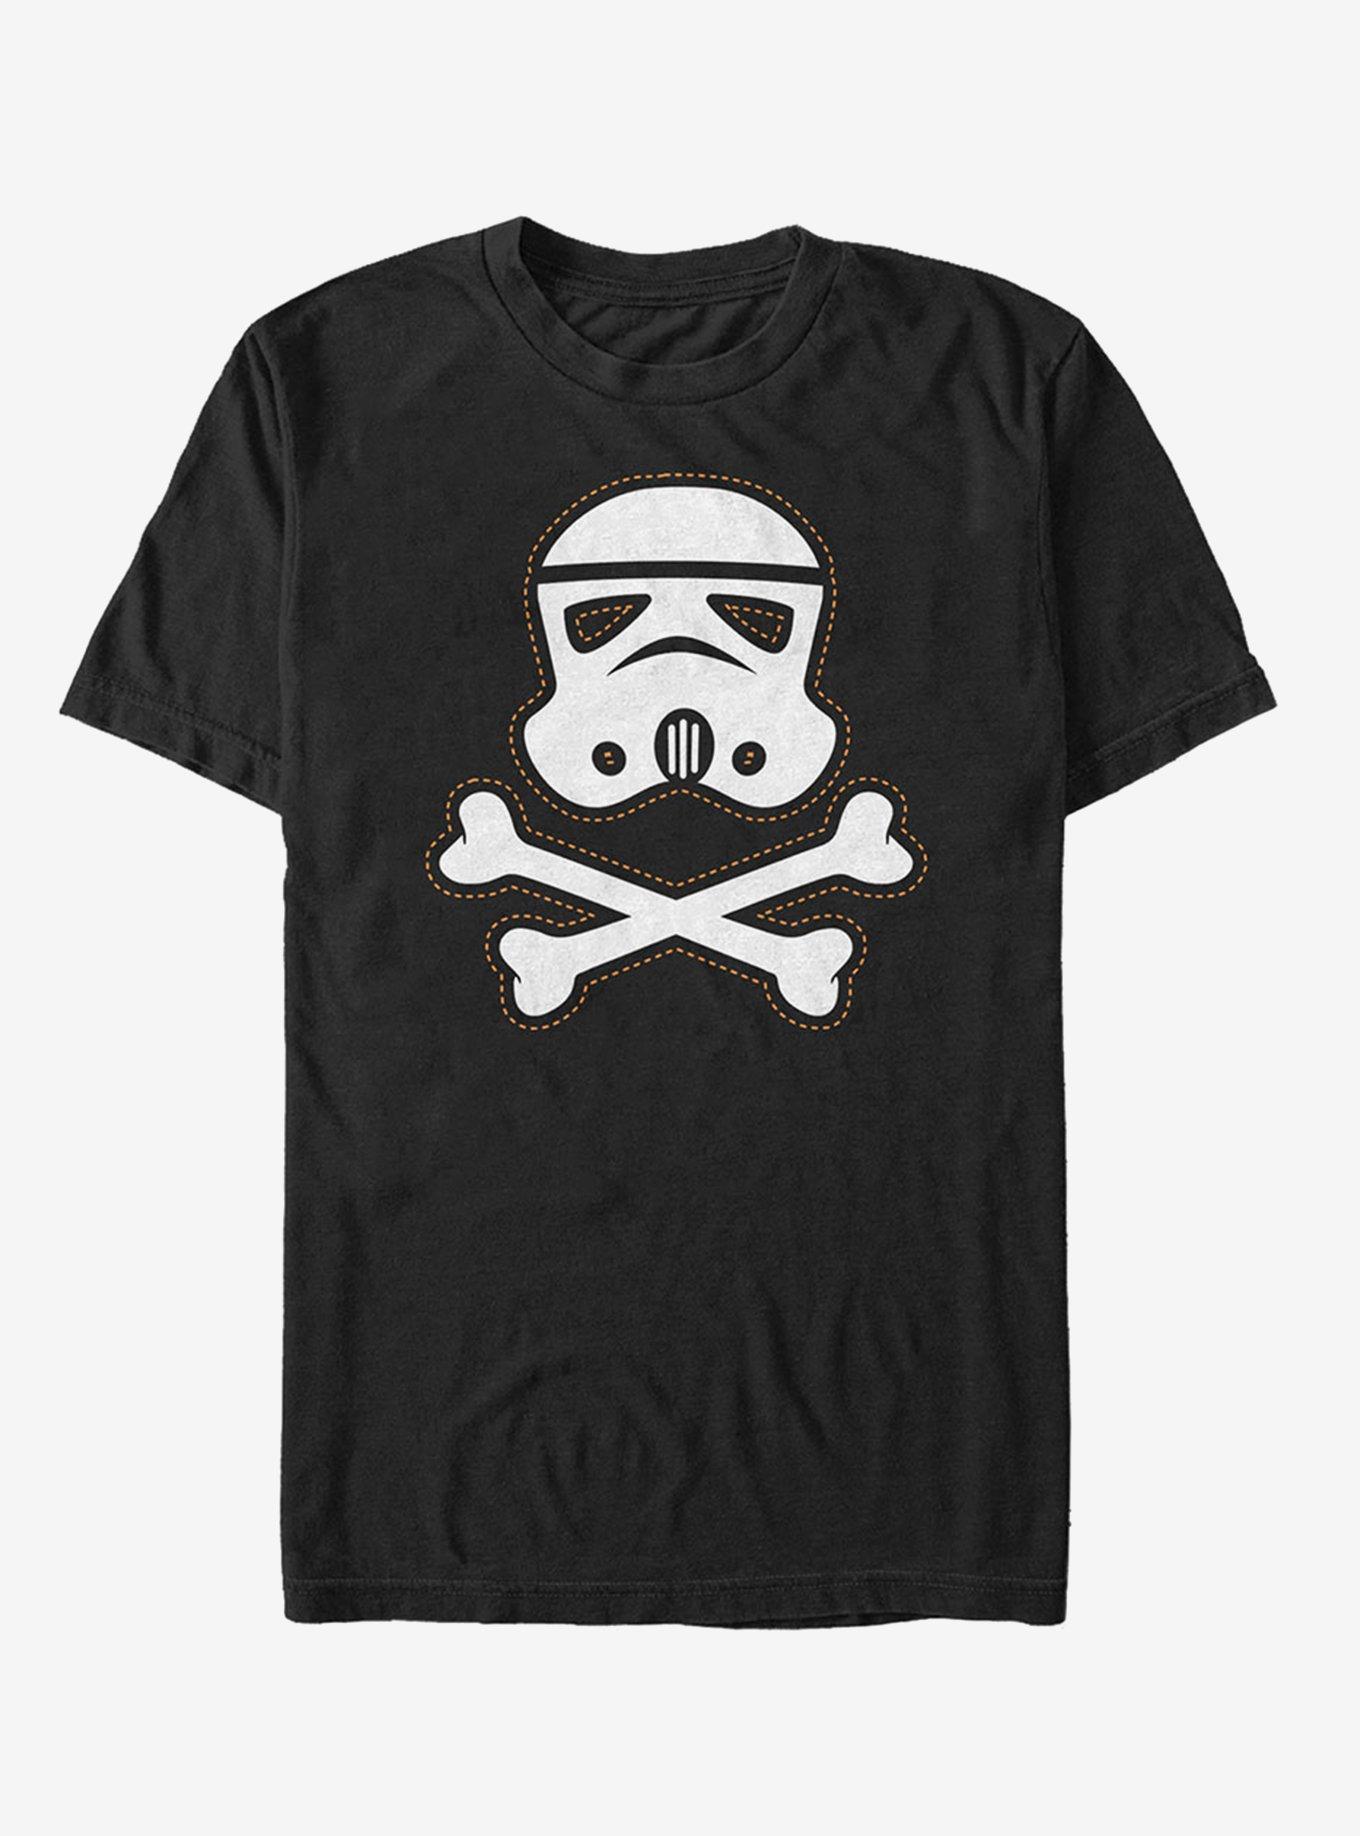 Halloween Stormtrooper Crossbones T-Shirt, , hi-res